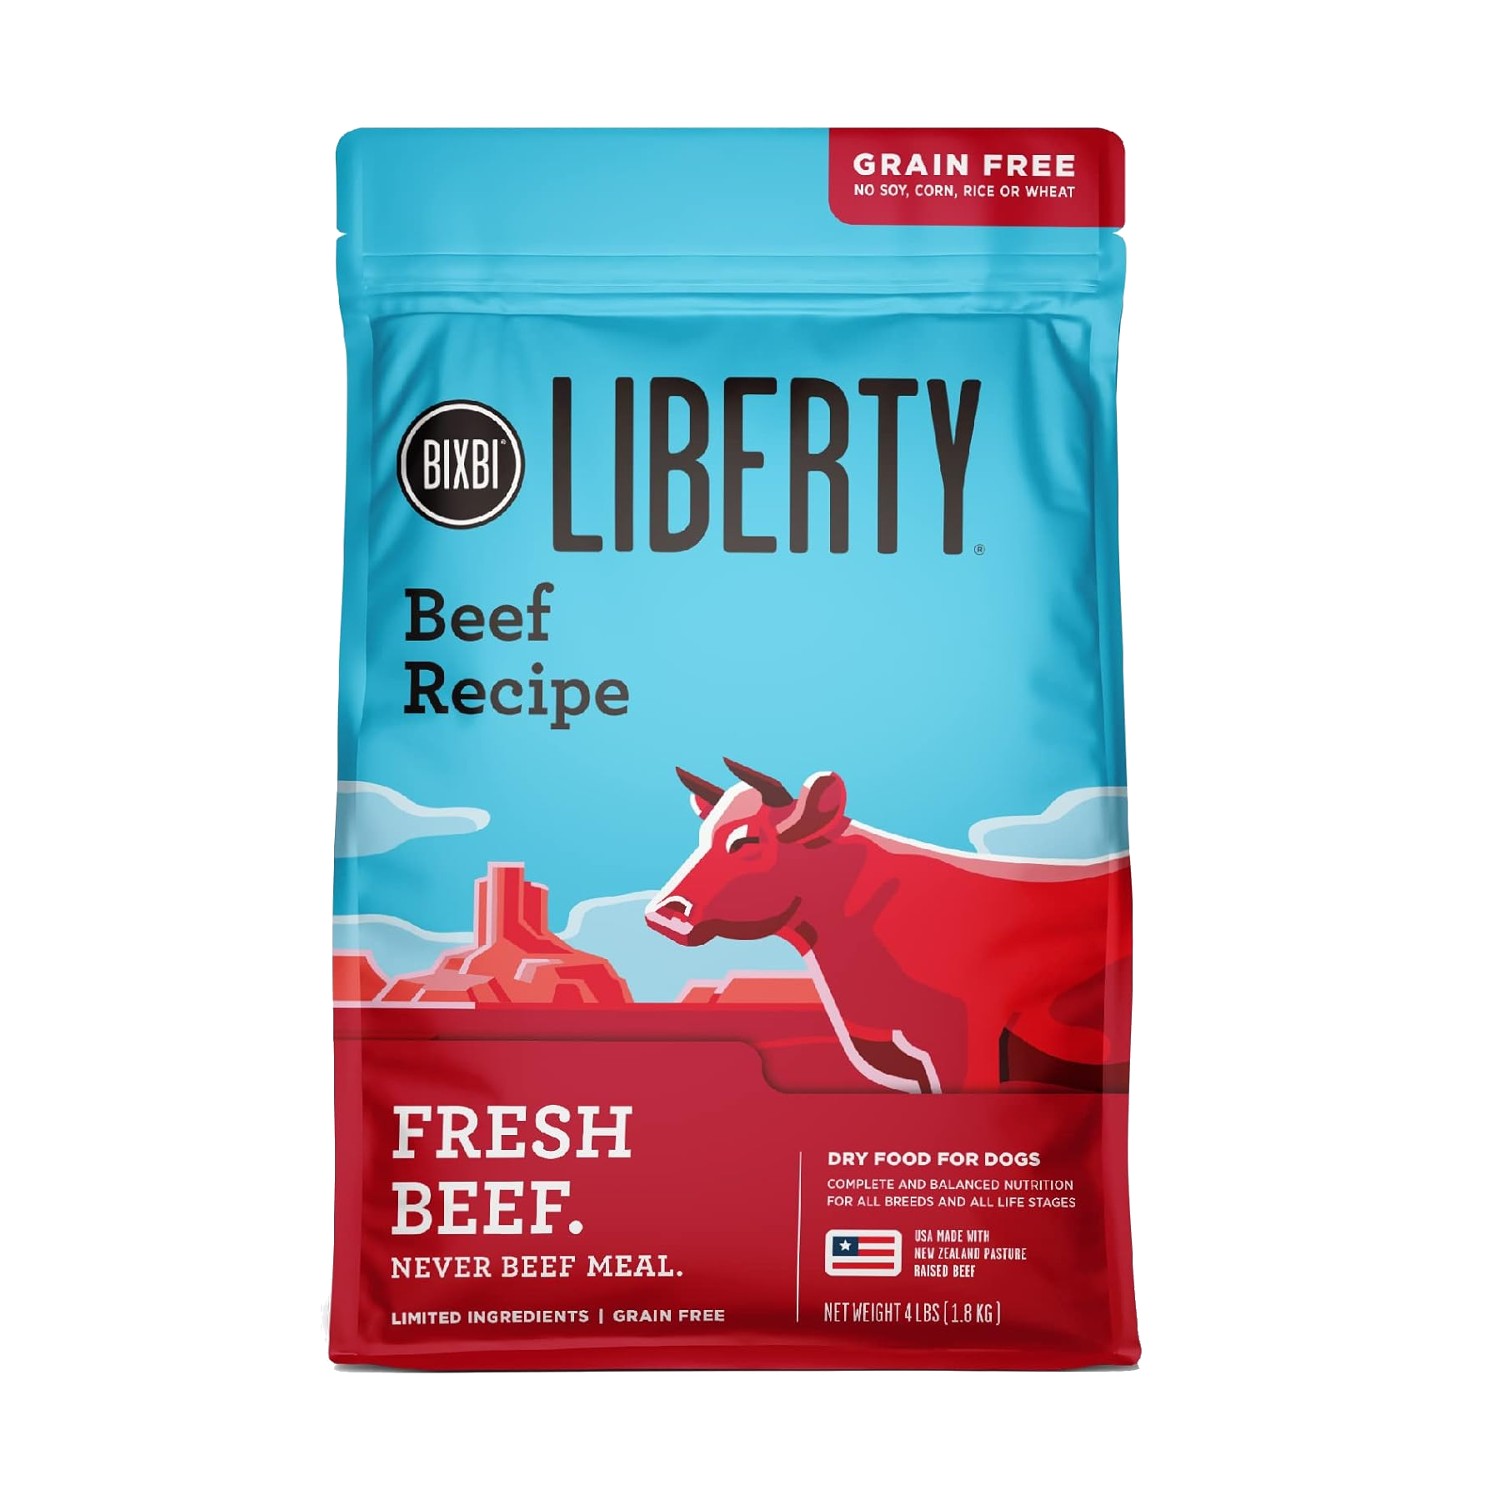 BIXBI Liberty Grain Free Dry Dog Food – Beef Recipe